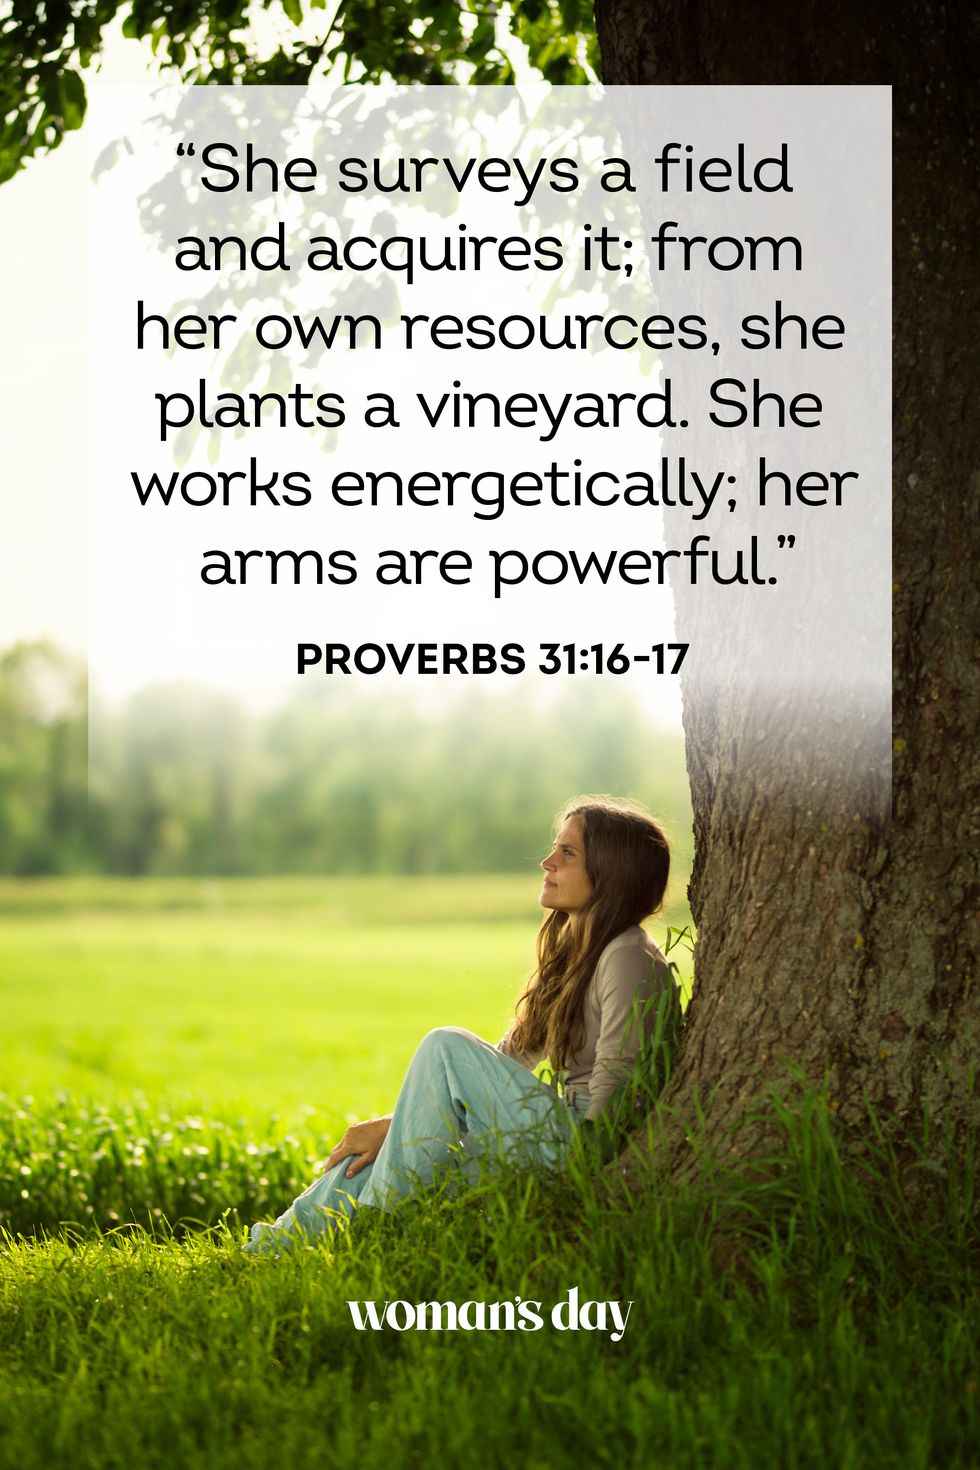 bible verses for women proverbs 31 16 17